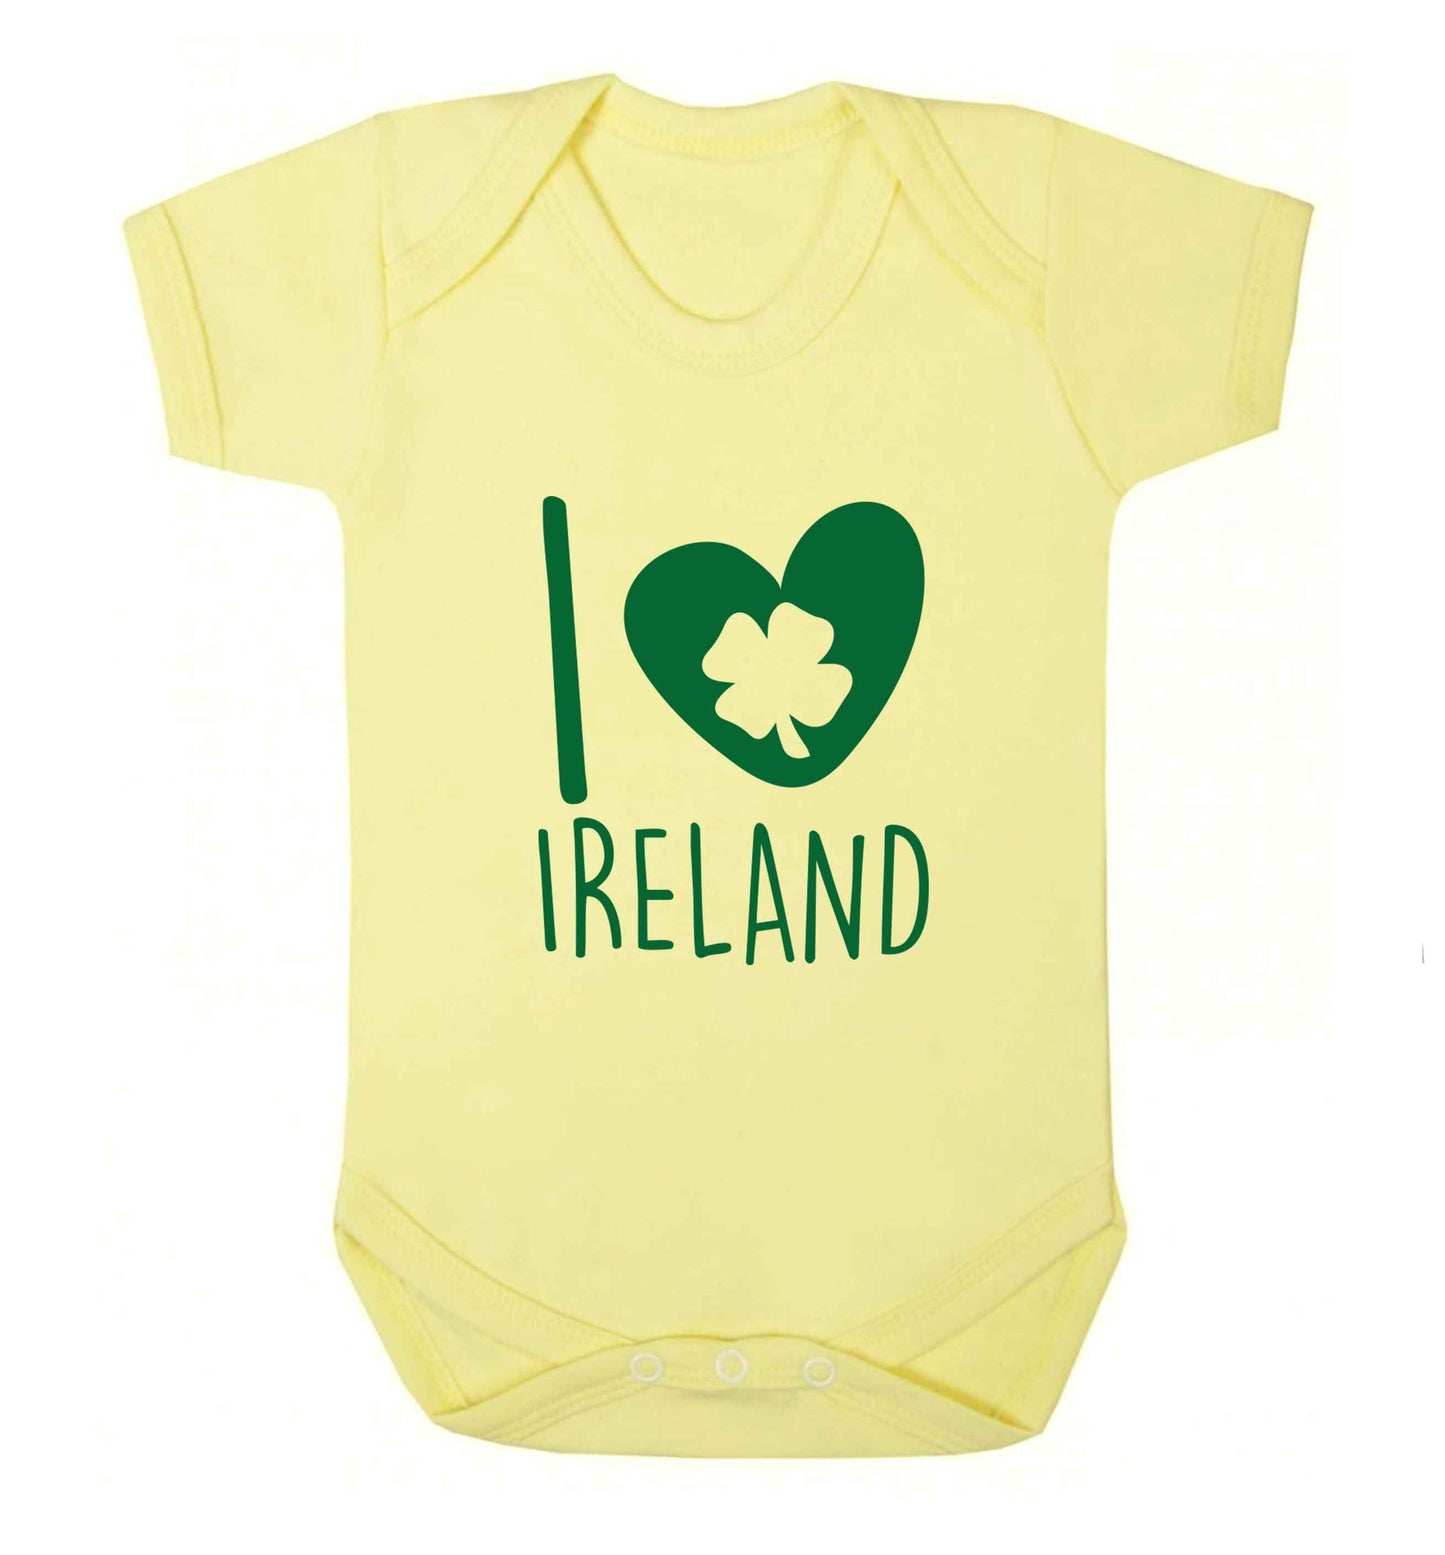 I love Ireland baby vest pale yellow 18-24 months